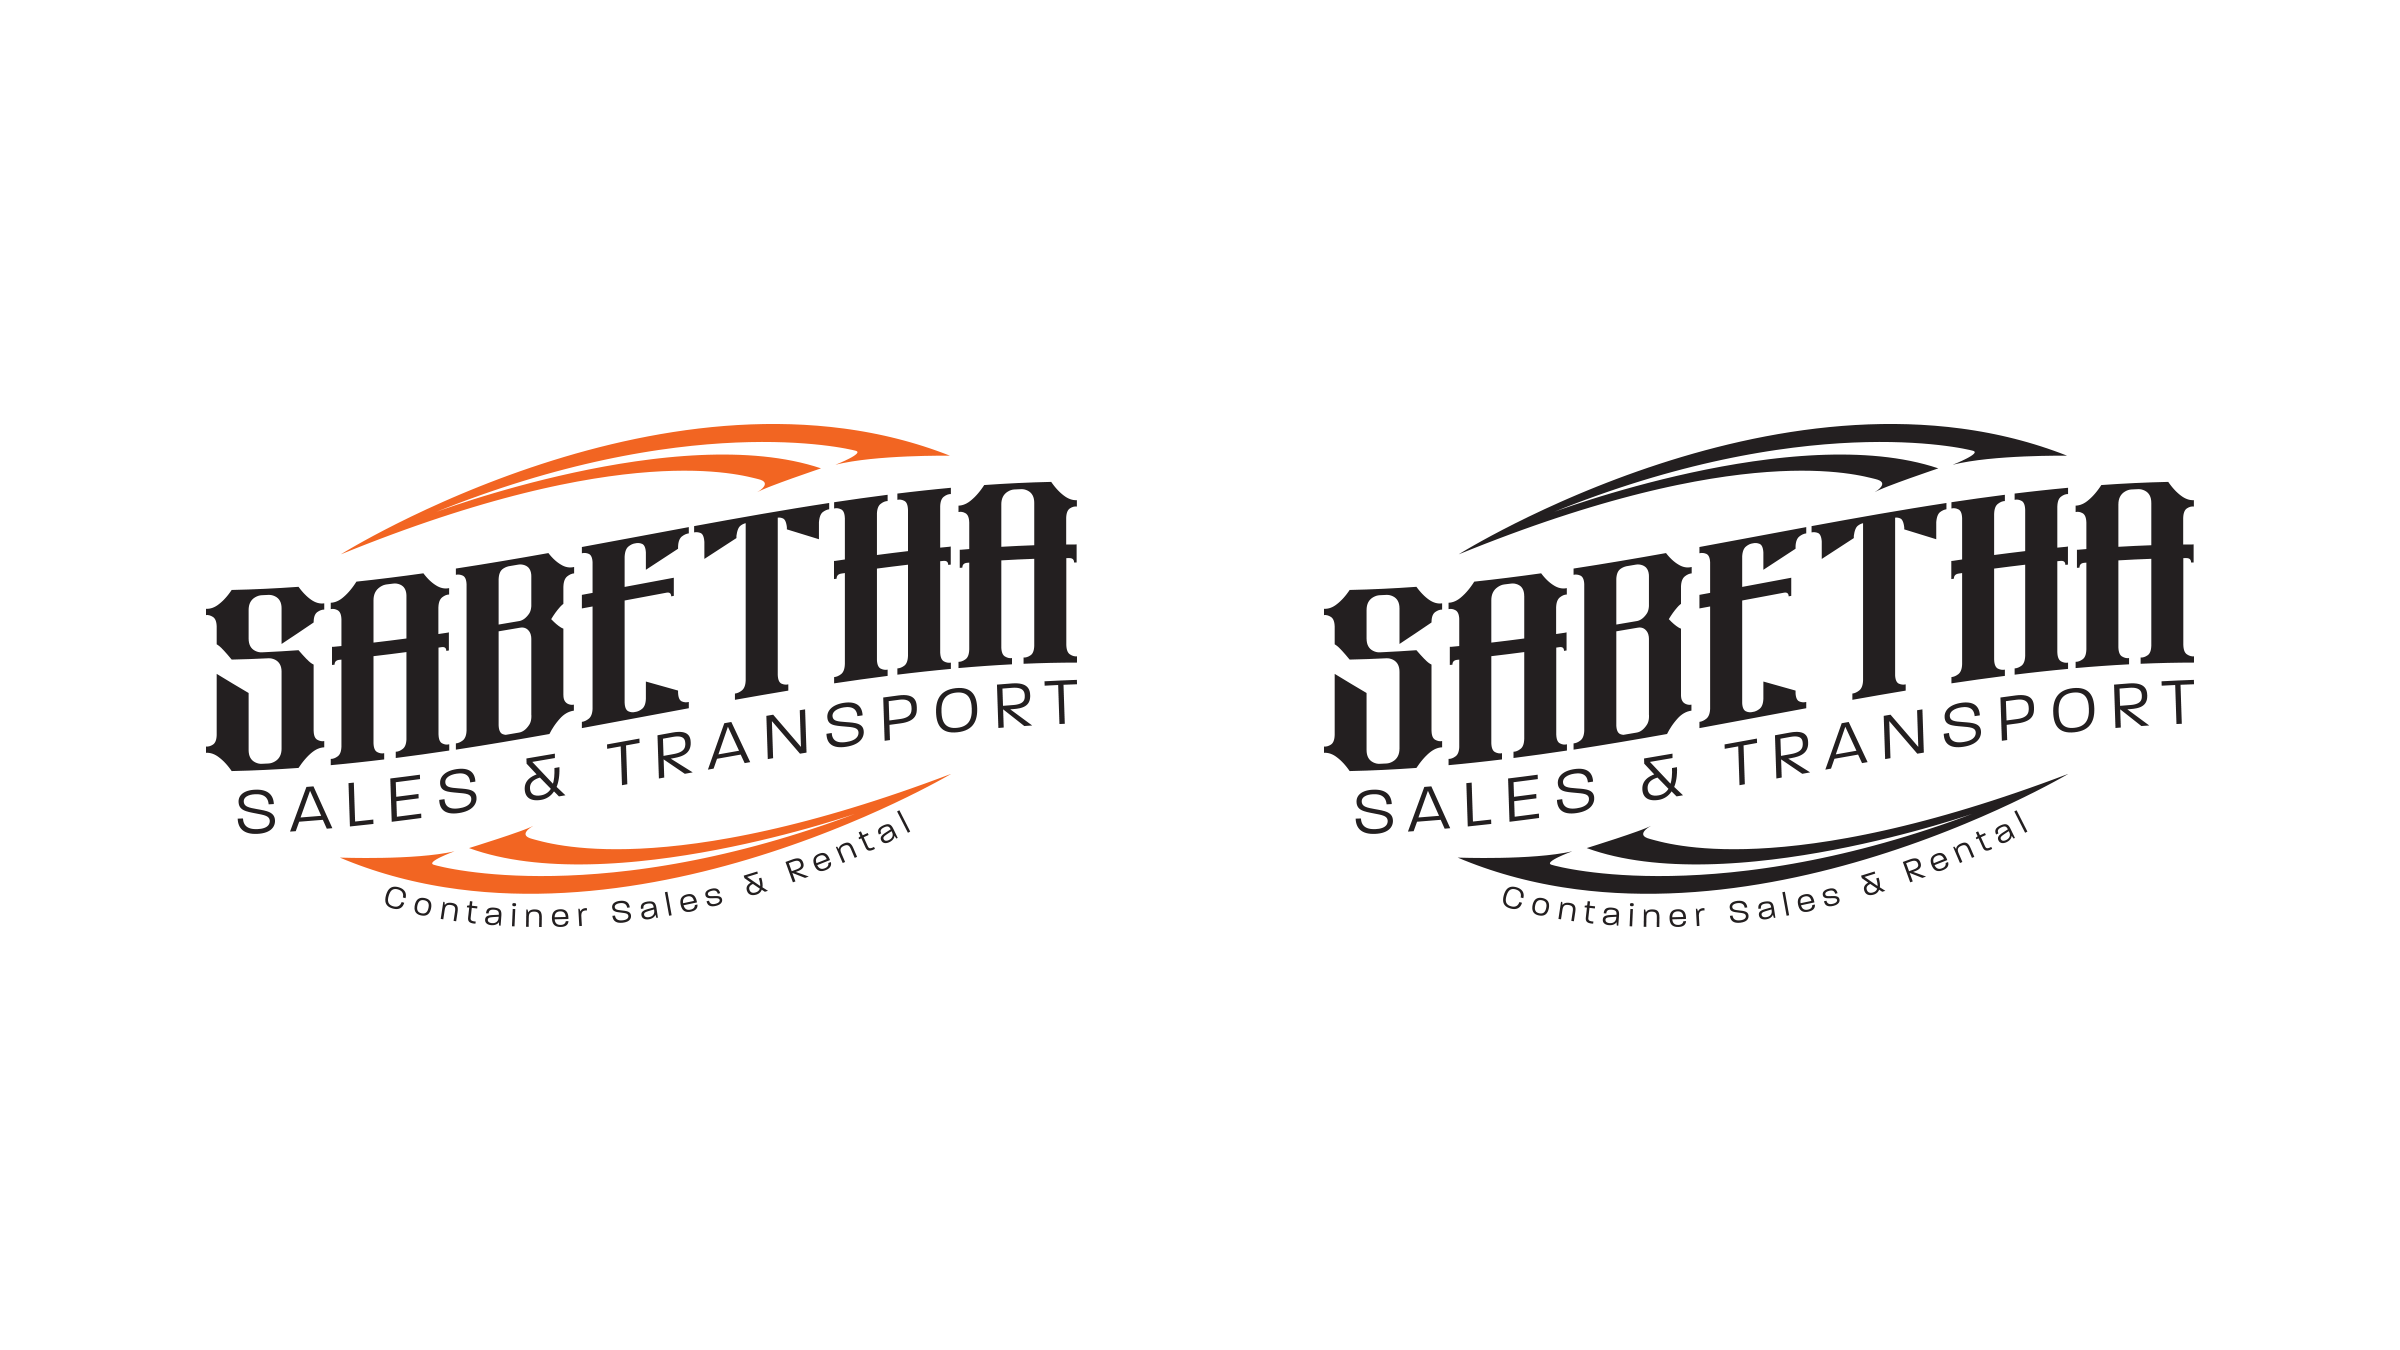 Sabetha-Sales-Logo-1.png